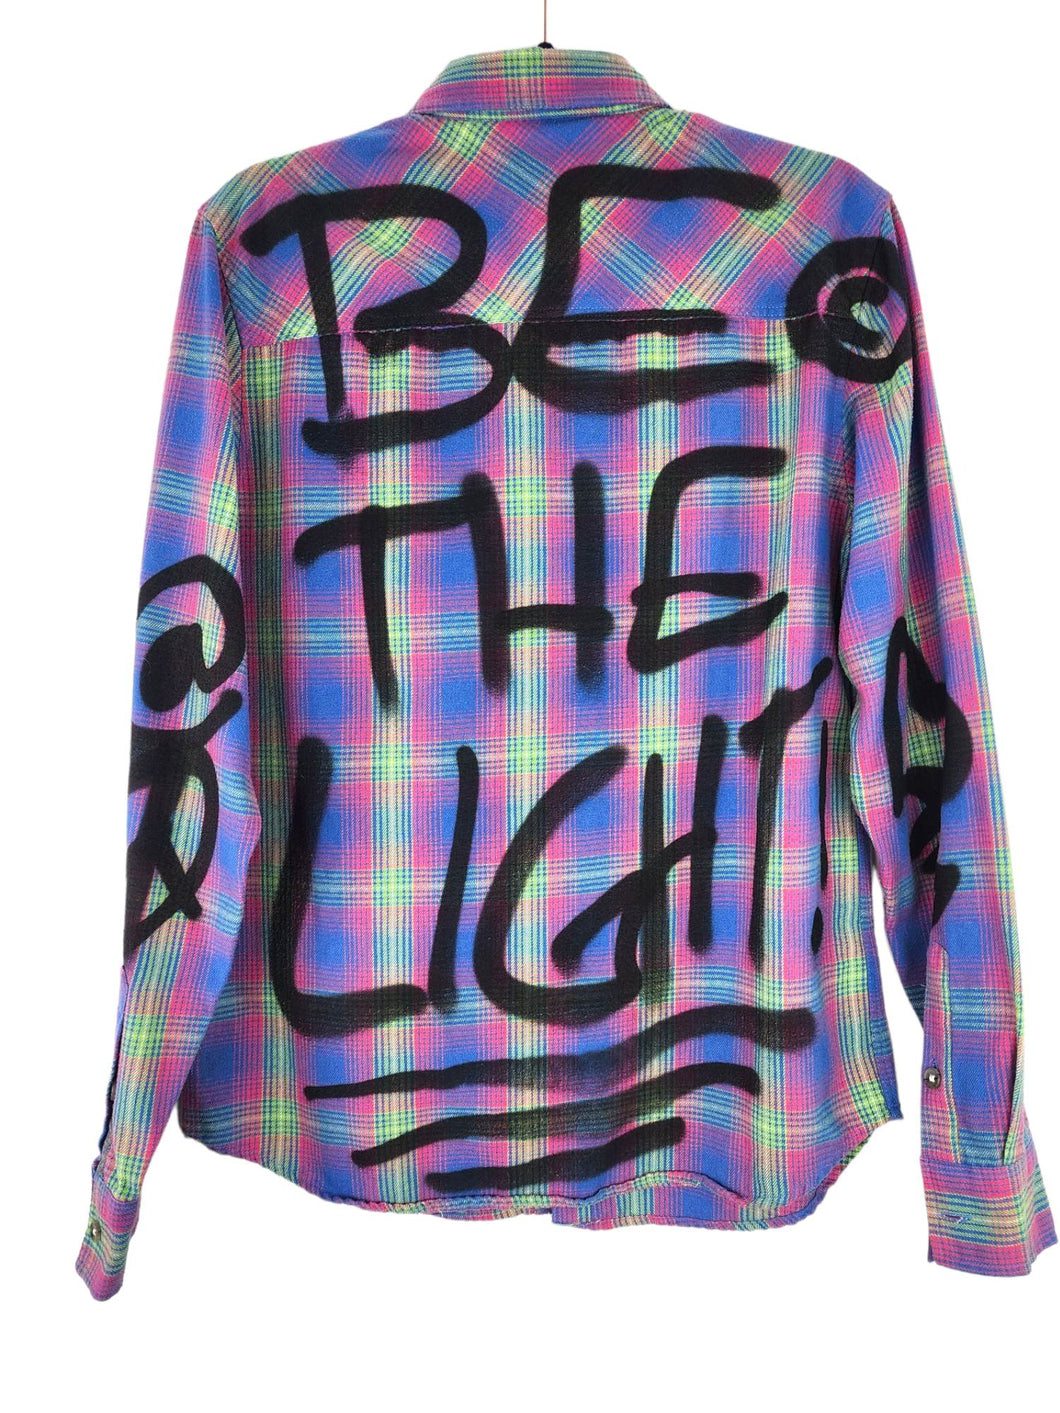 BE THE LIGHT Check Shirt